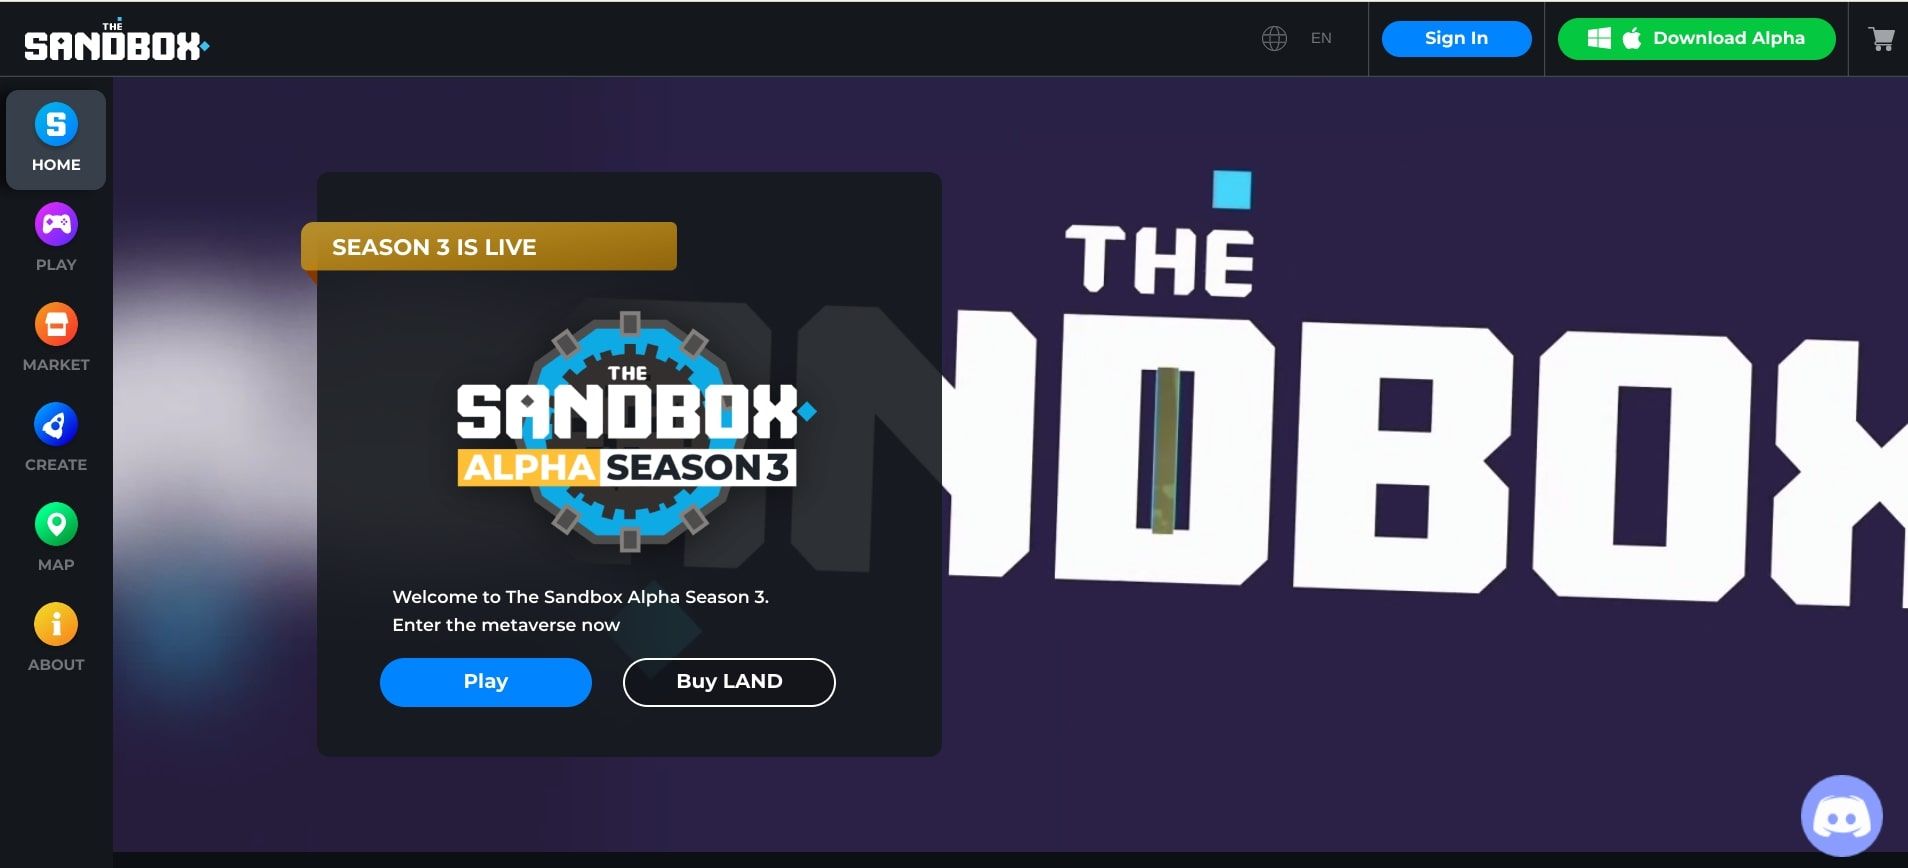 the sandbox website homepage screenshot